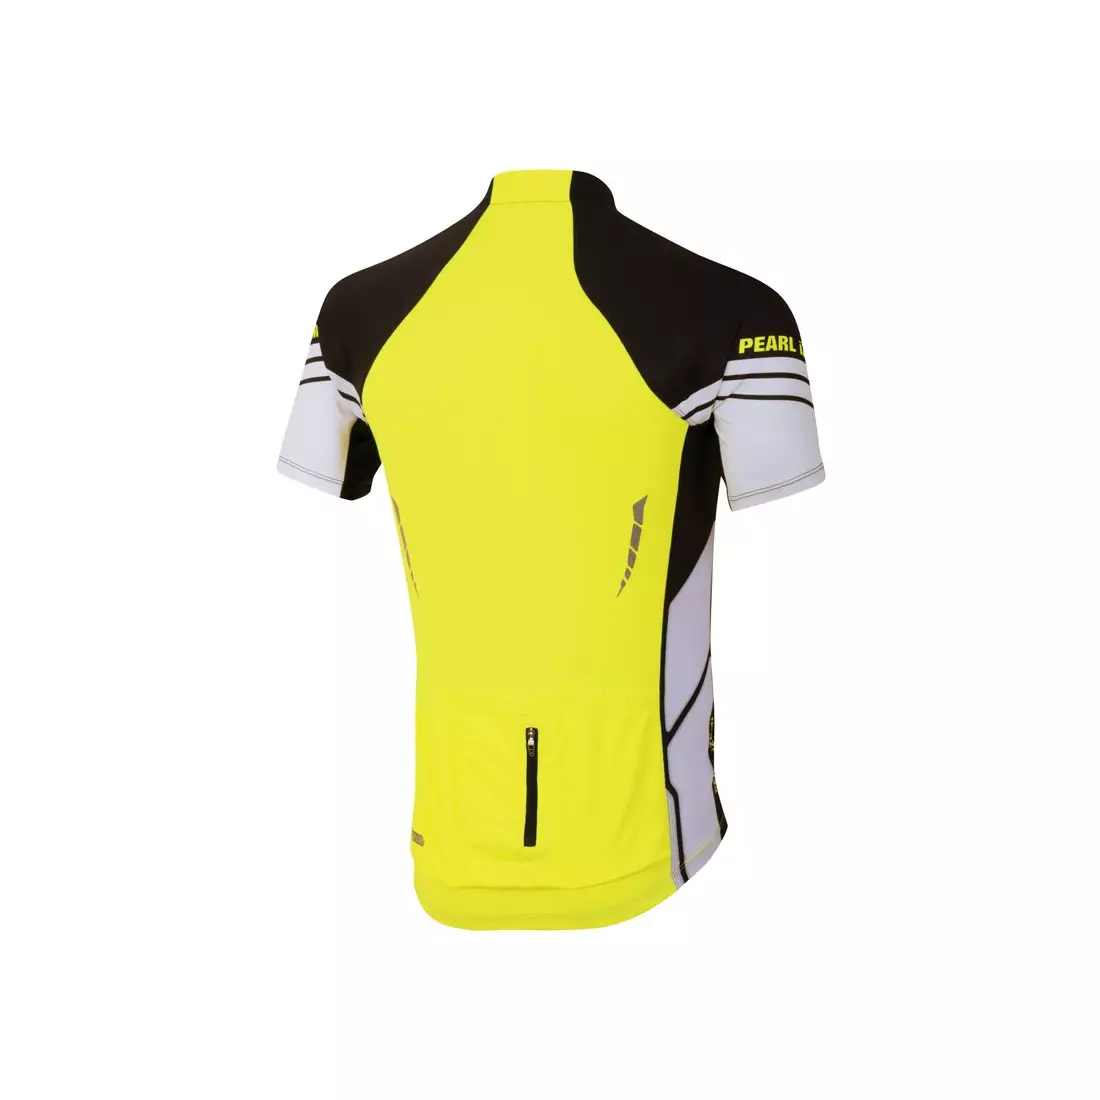 PEARL IZUMI - ELITE 11121301-429 - světlý cyklistický dres, barva: Fluoro-černá